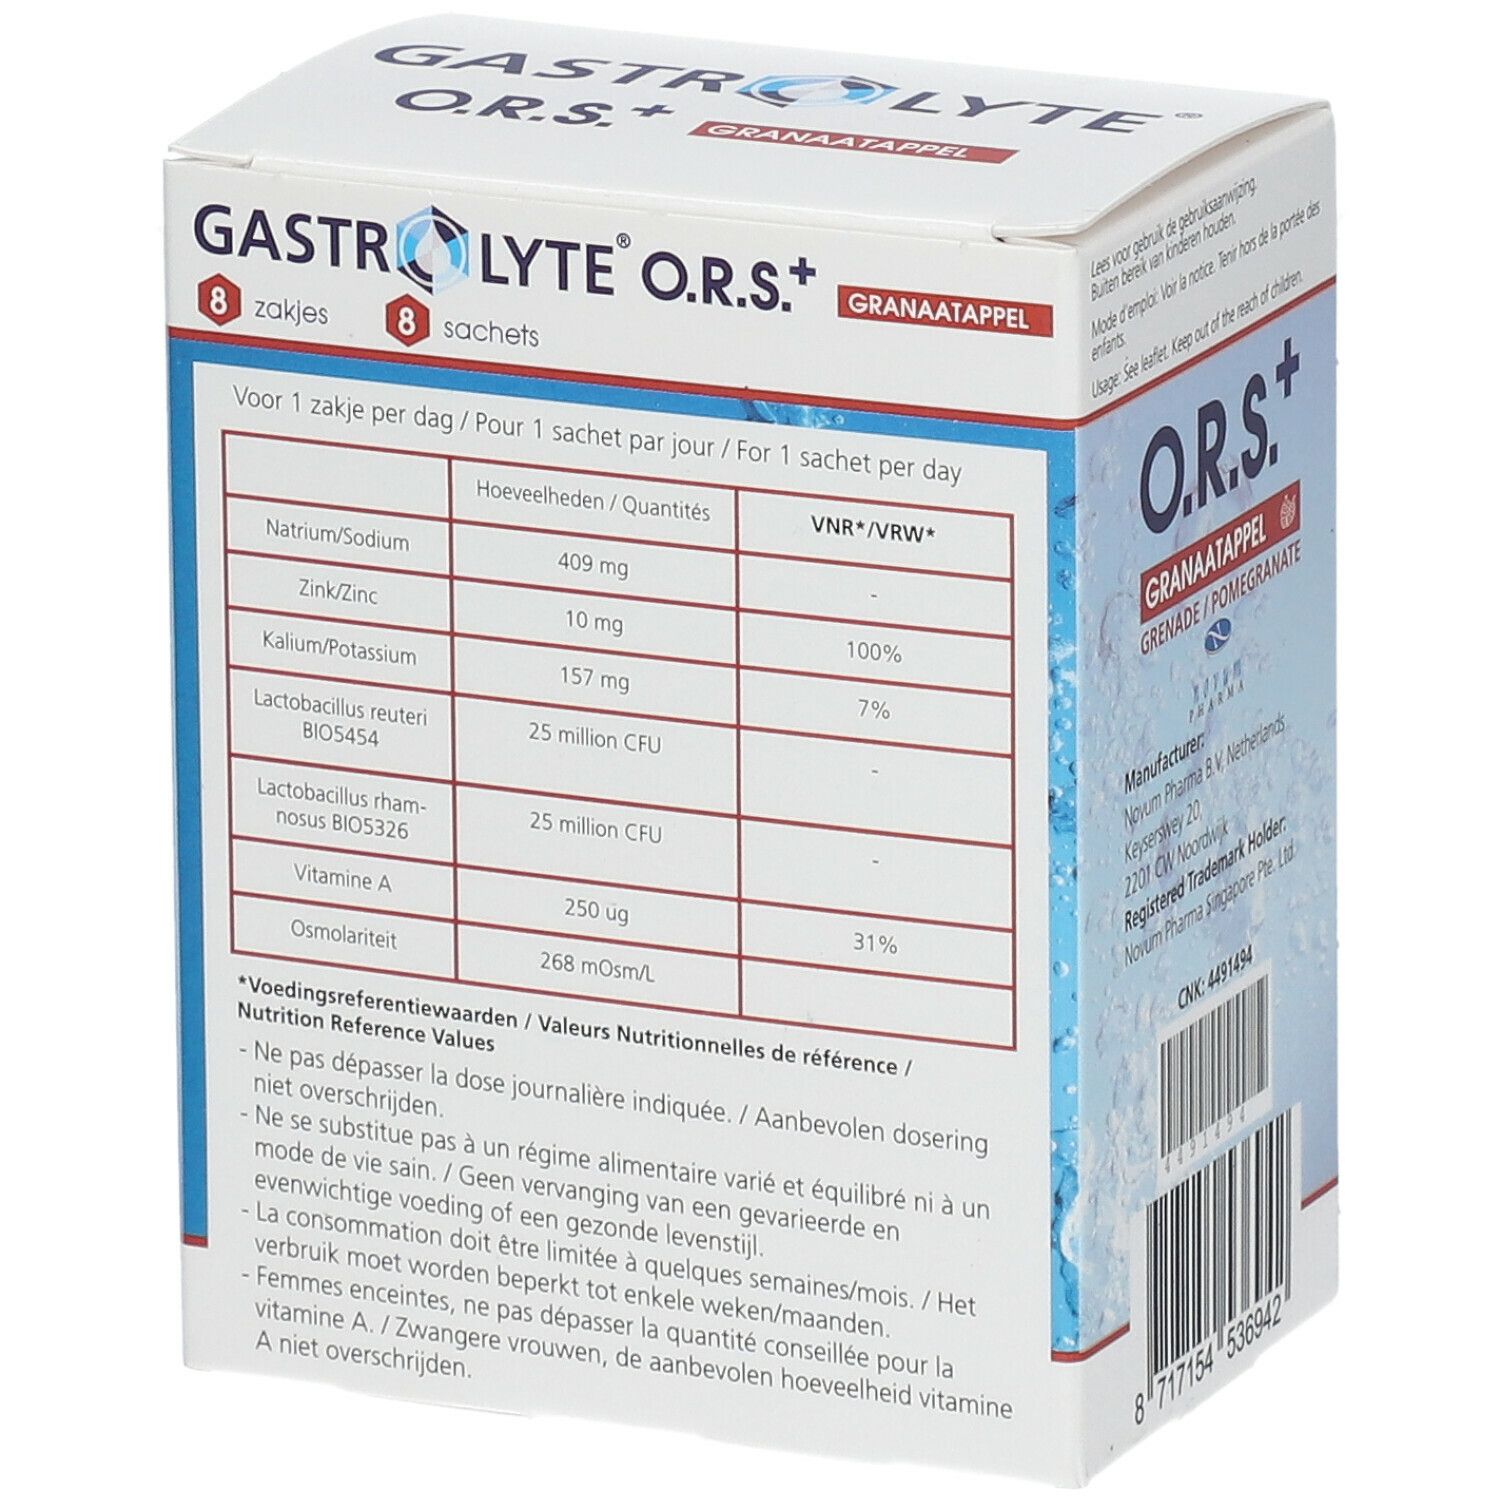 Gastrolyte® O.r.s.+ Balance Grenade 8 sachets